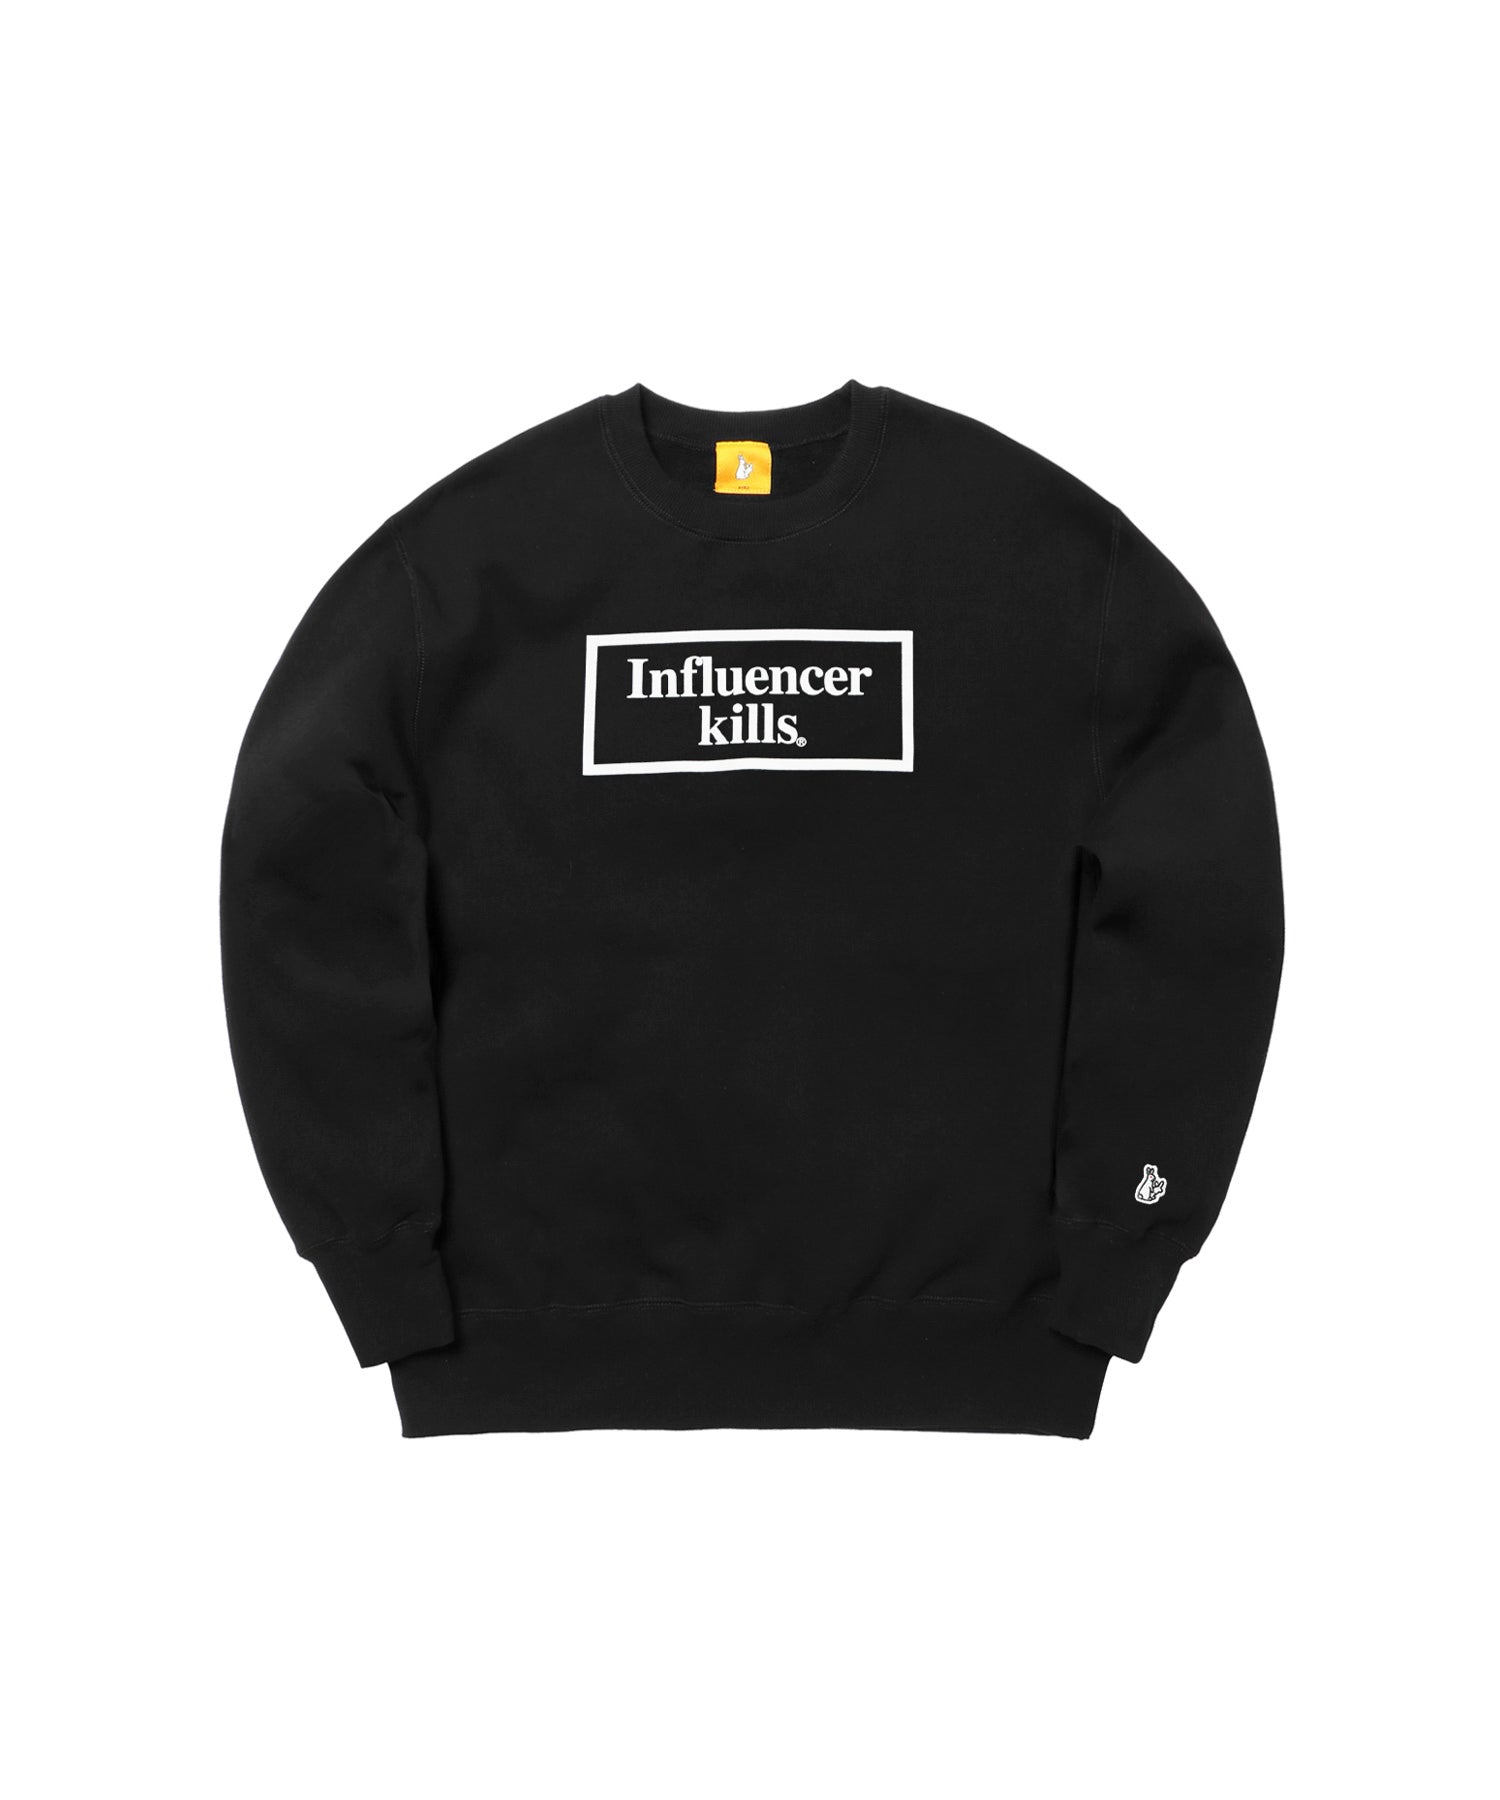 Influencer kills Sweatshirt